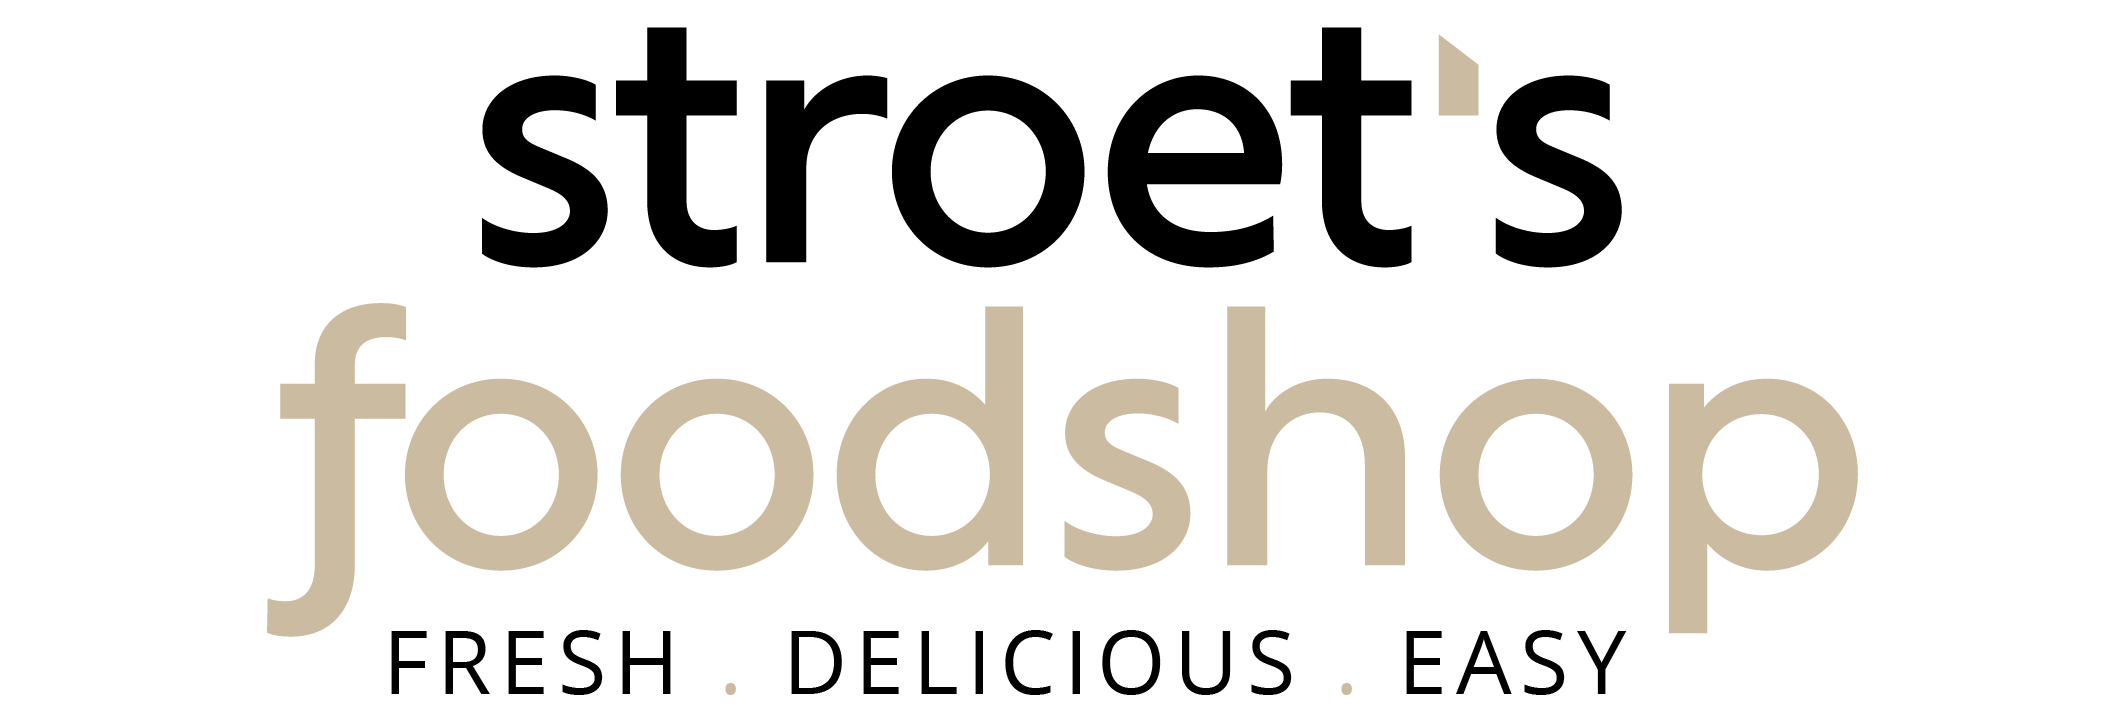 stroets-foodshop